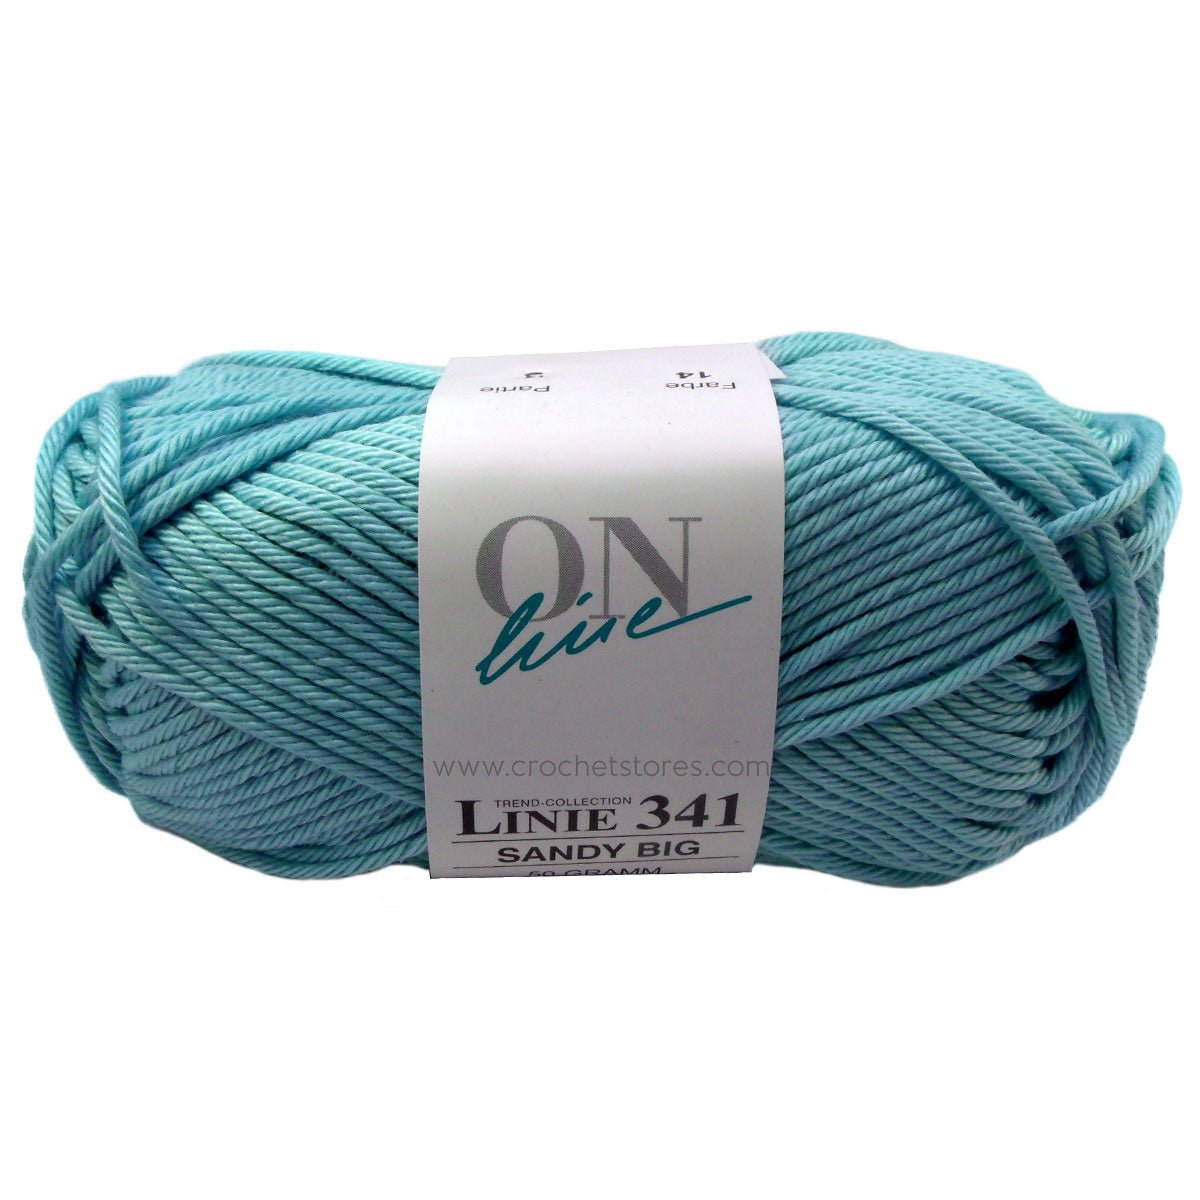 SANDY BIG - Crochetstores110341-0144014366146261